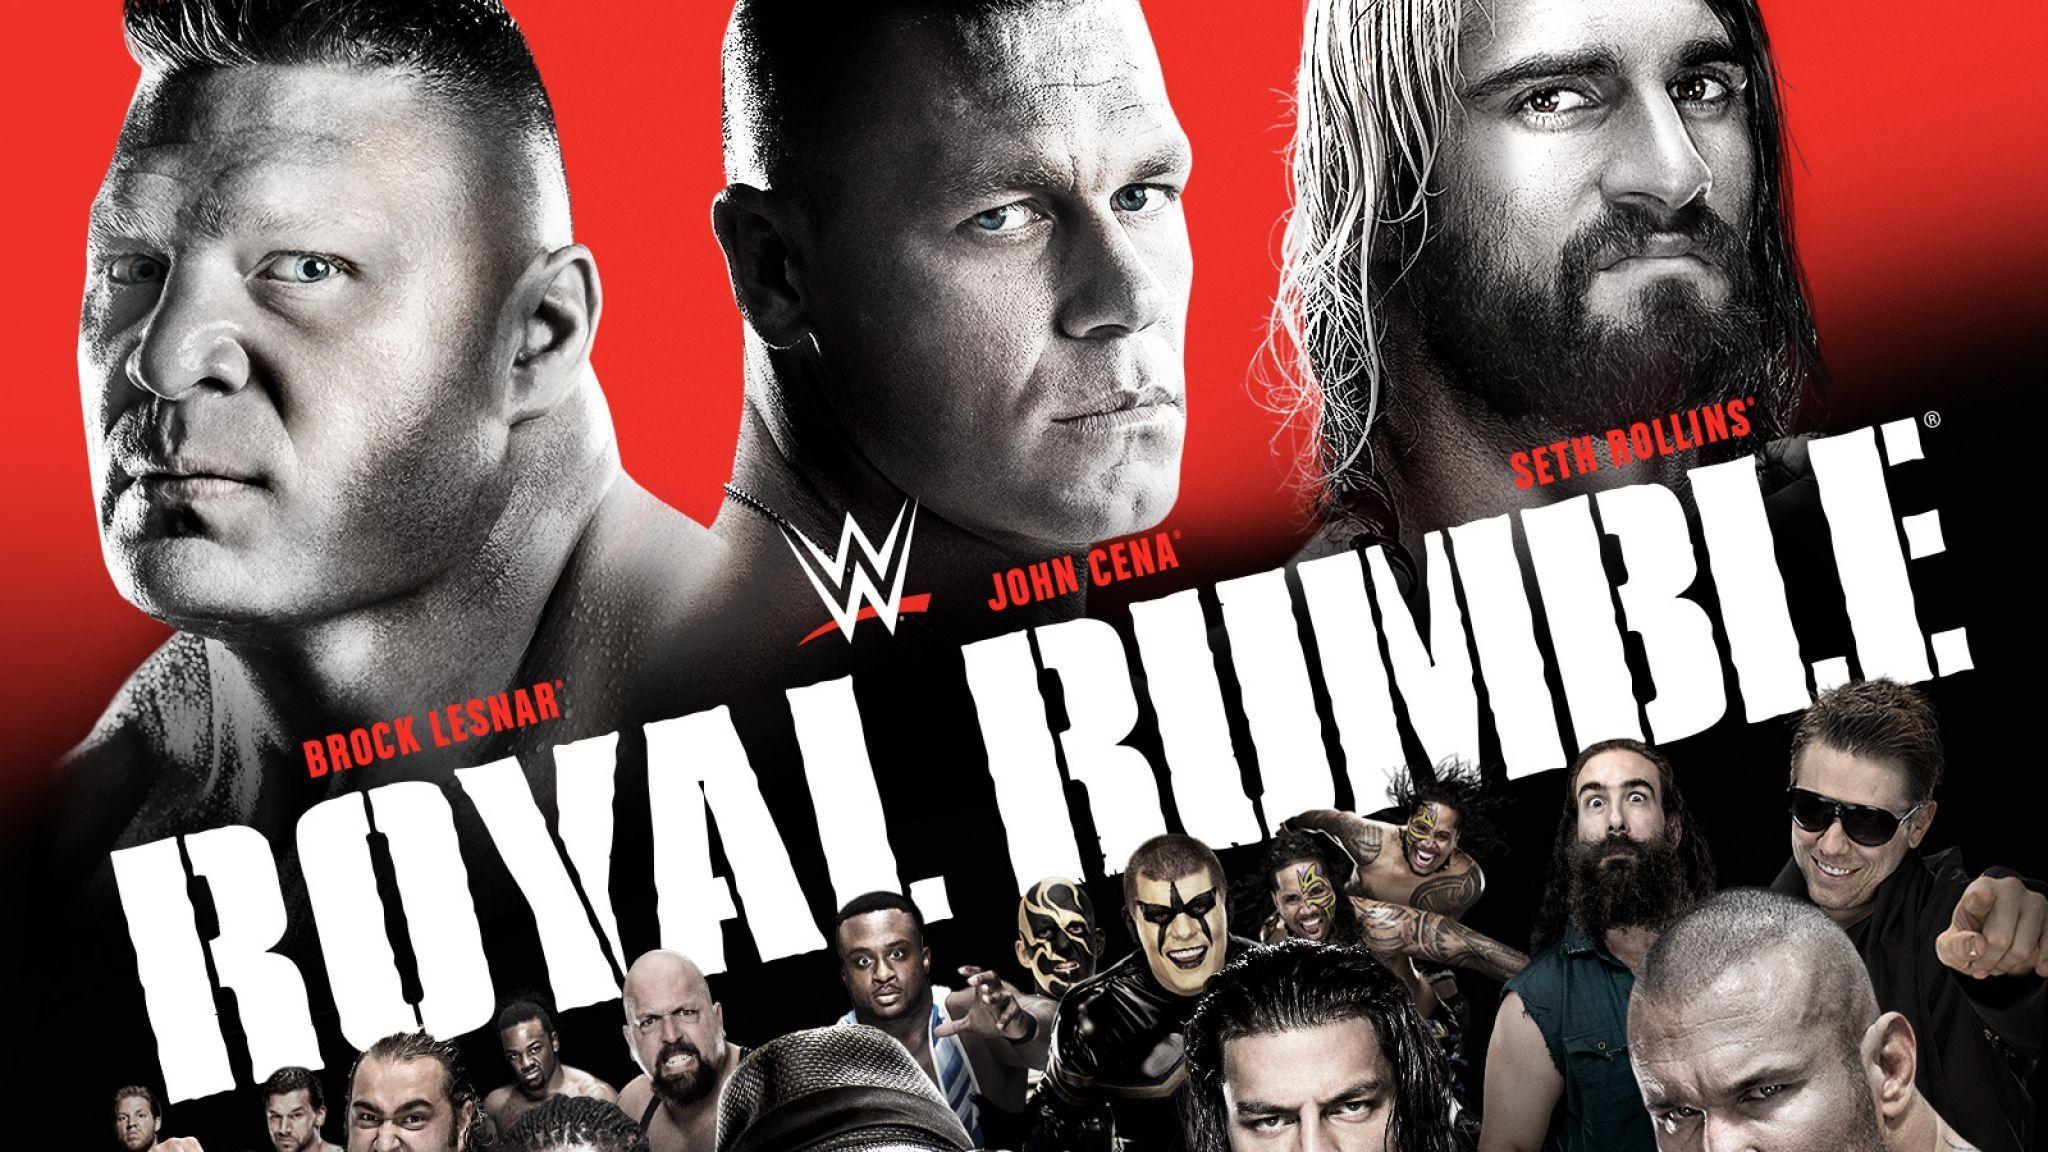 Download Download Wwe John Cena Wallpaper For Android #fhRvI